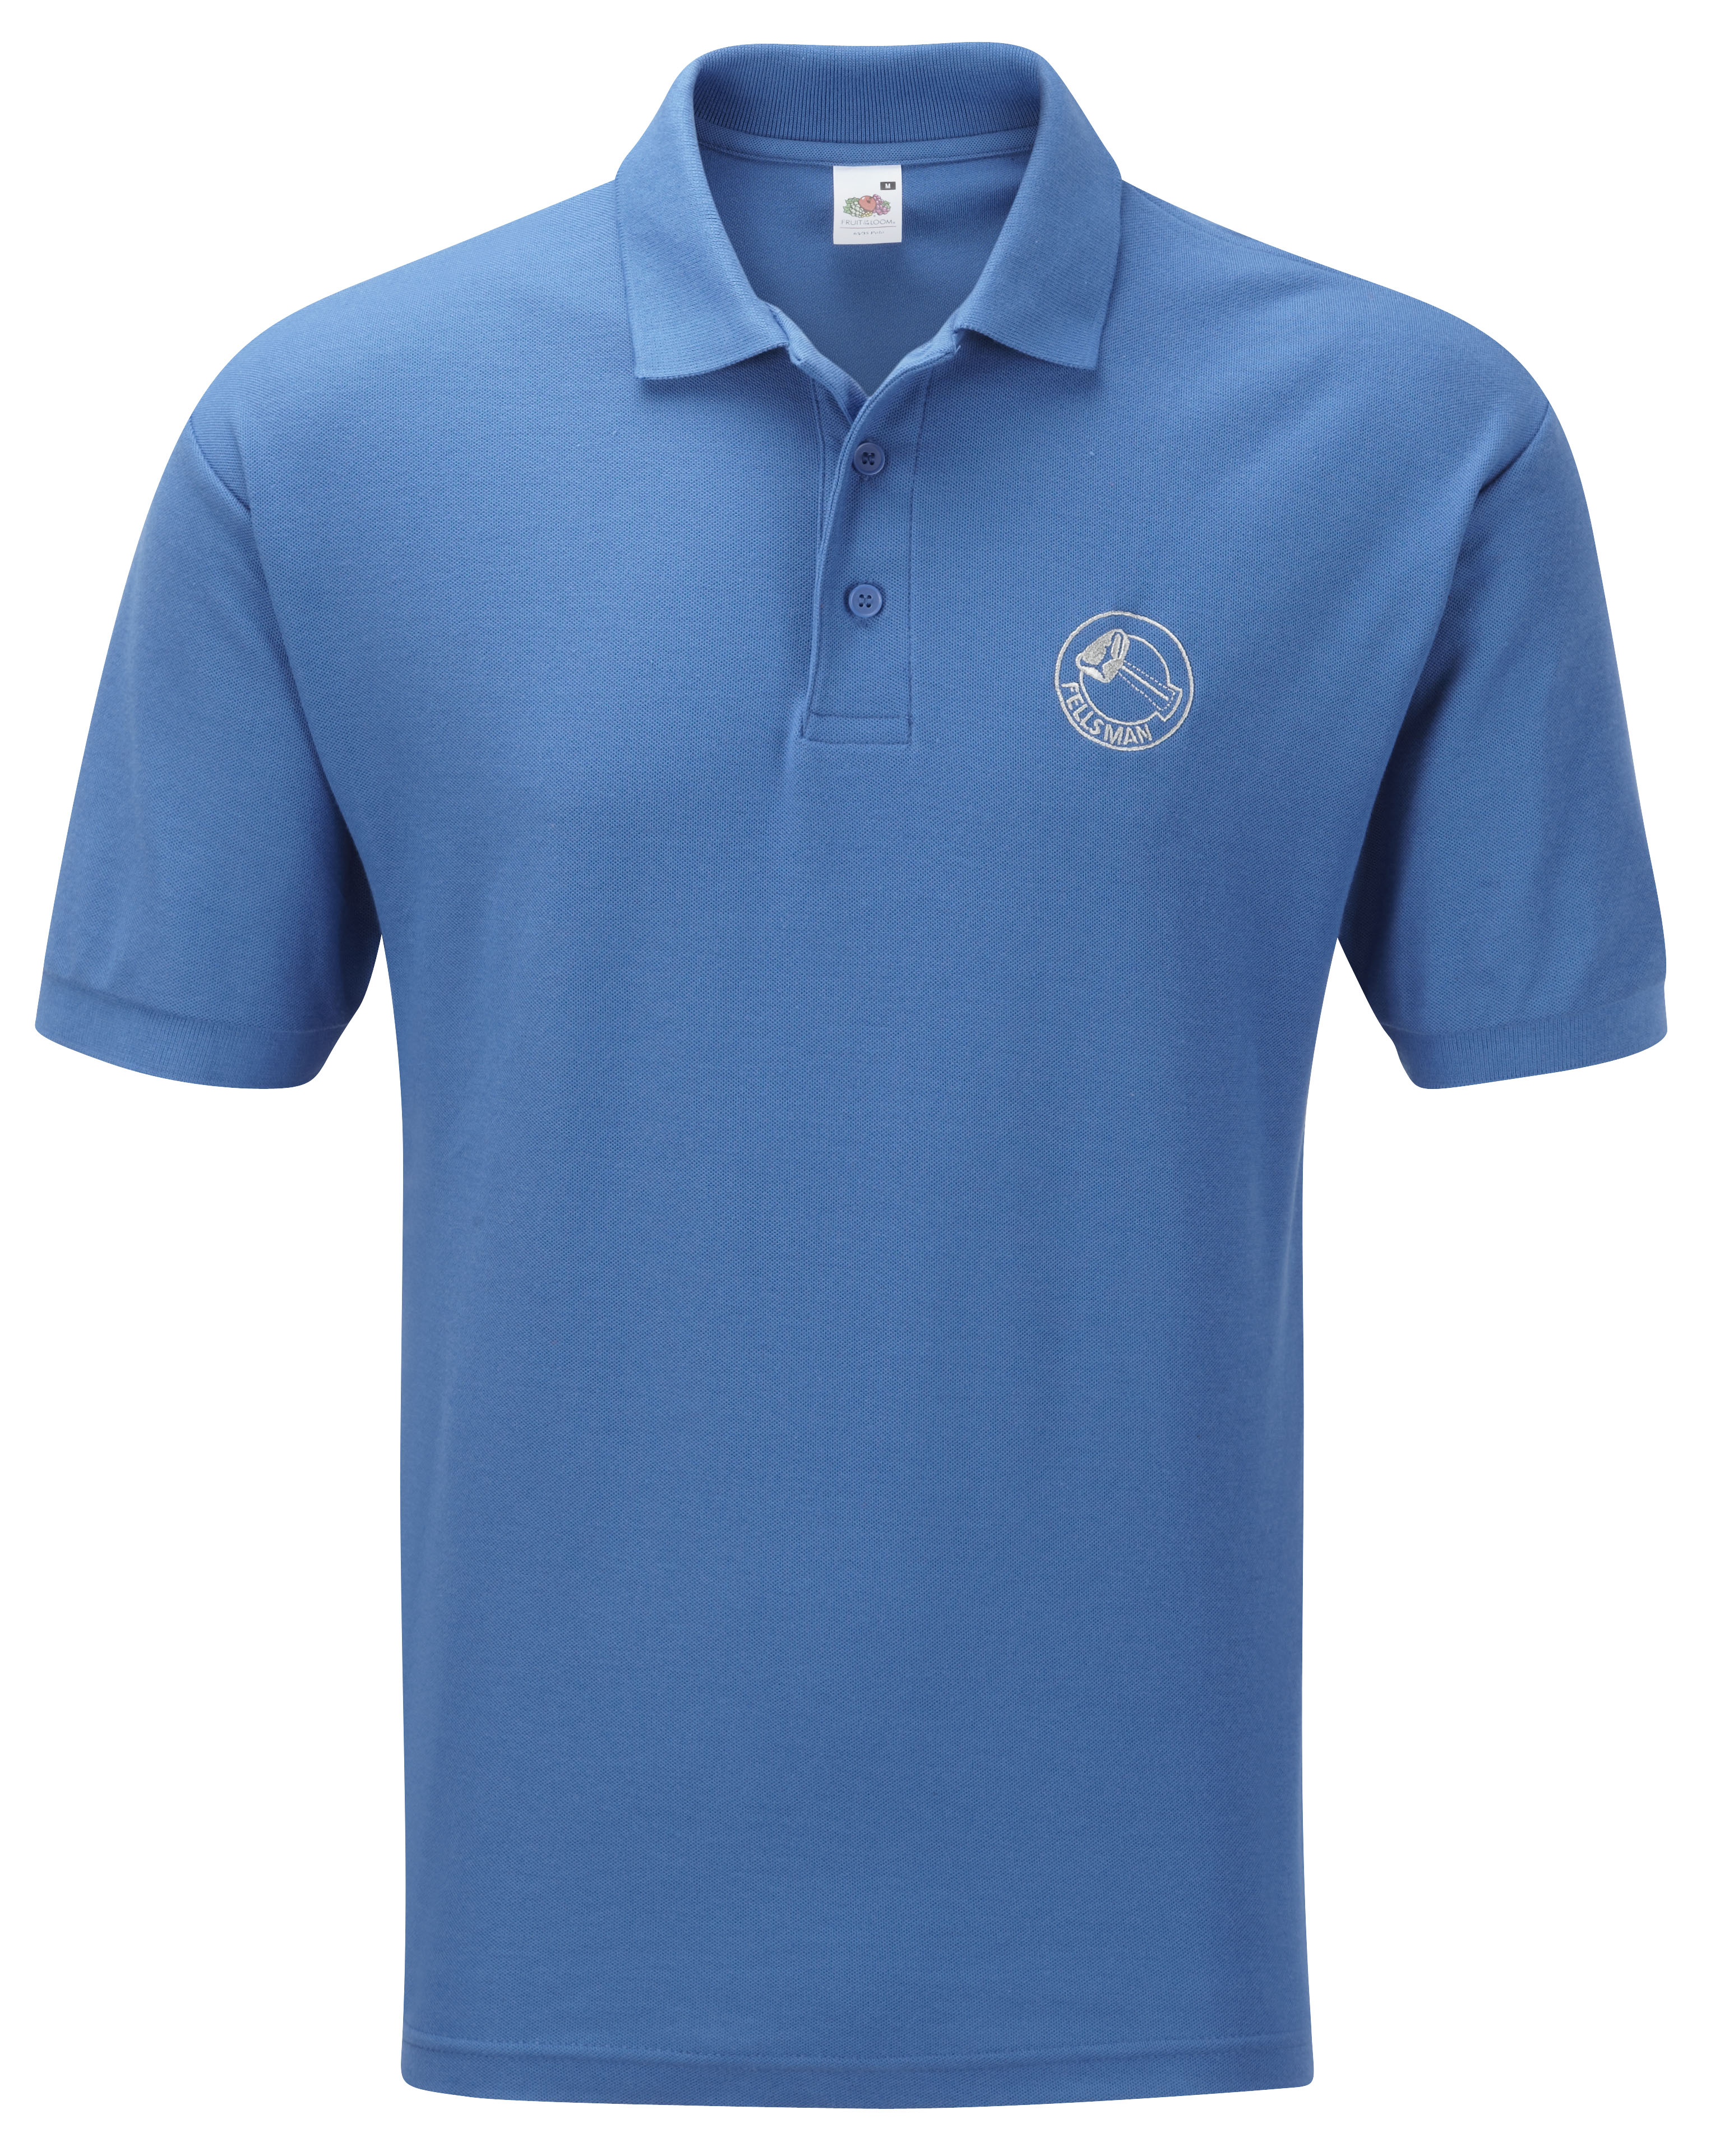 Polo T Shirt with Embroidery - T-Shirts Printing Dubai UAE